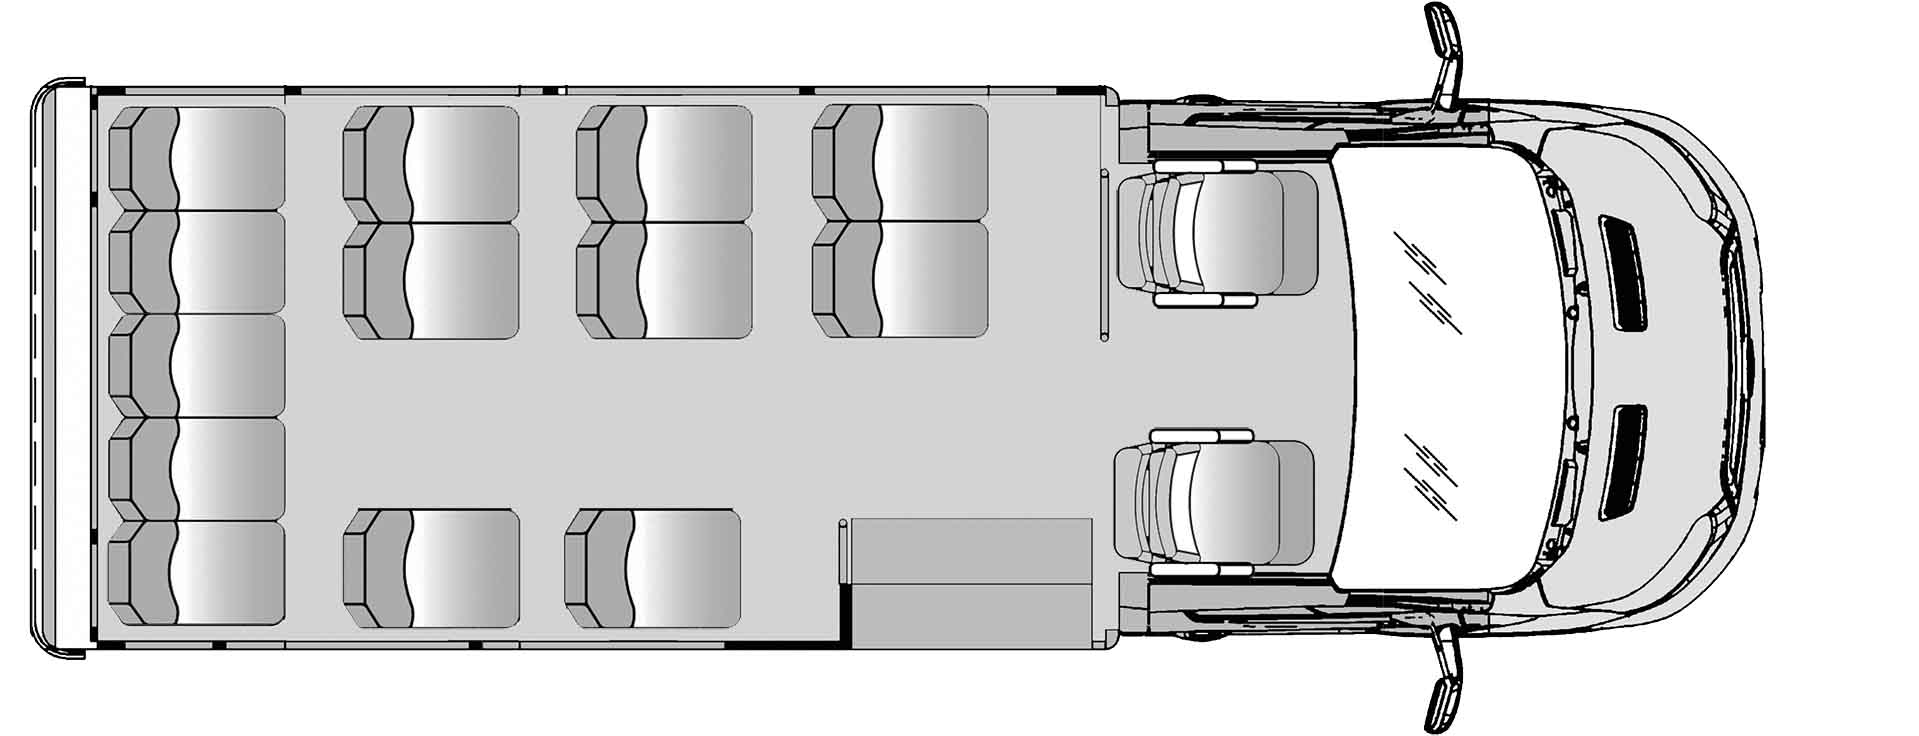 13 Passenger Plus Driver Floorplan Image